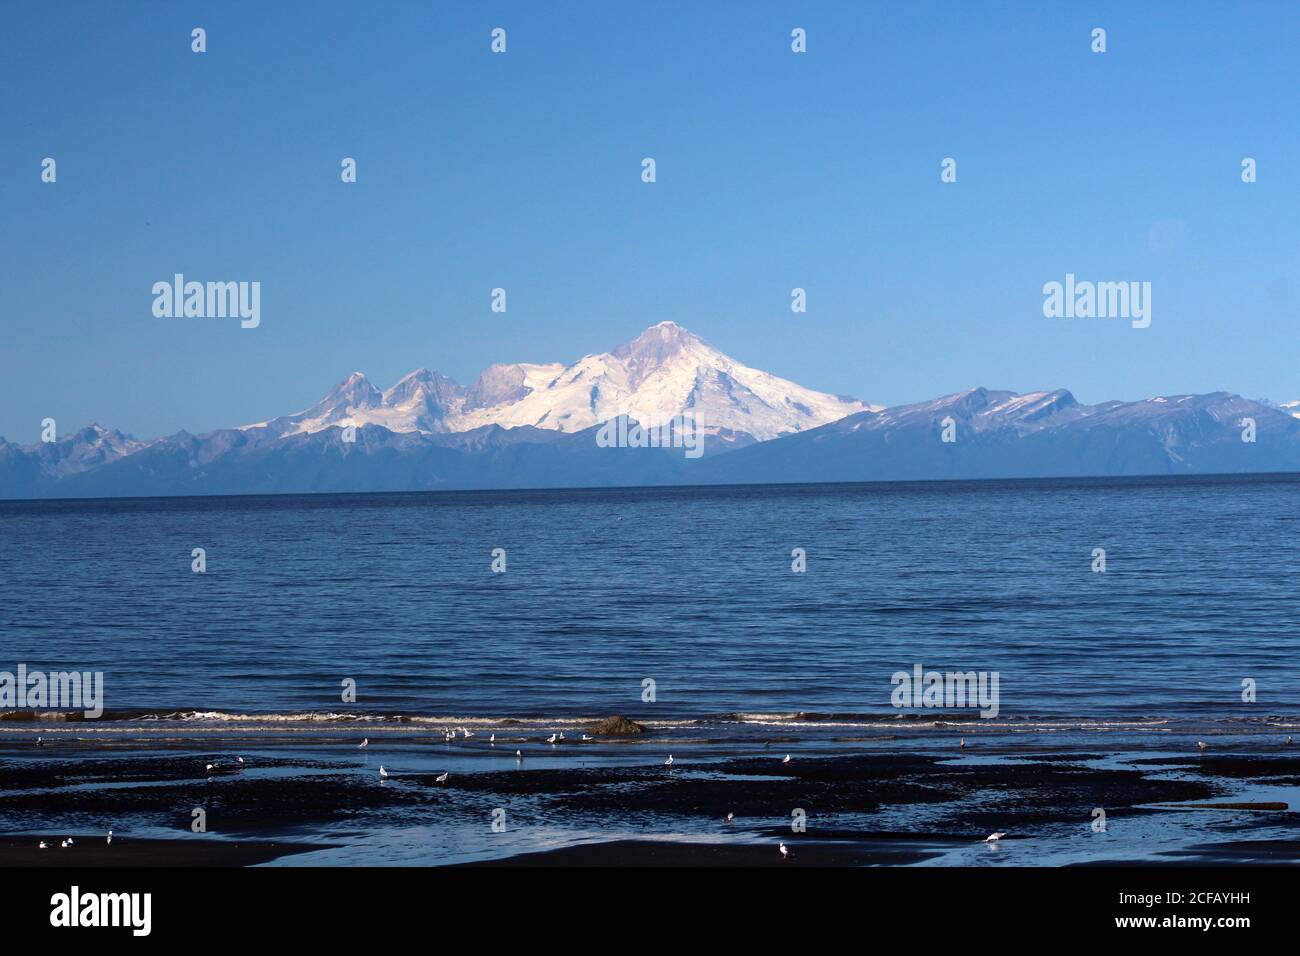 Alaska, Mount Iliamna, Cook Inlet, United States Stock Photo